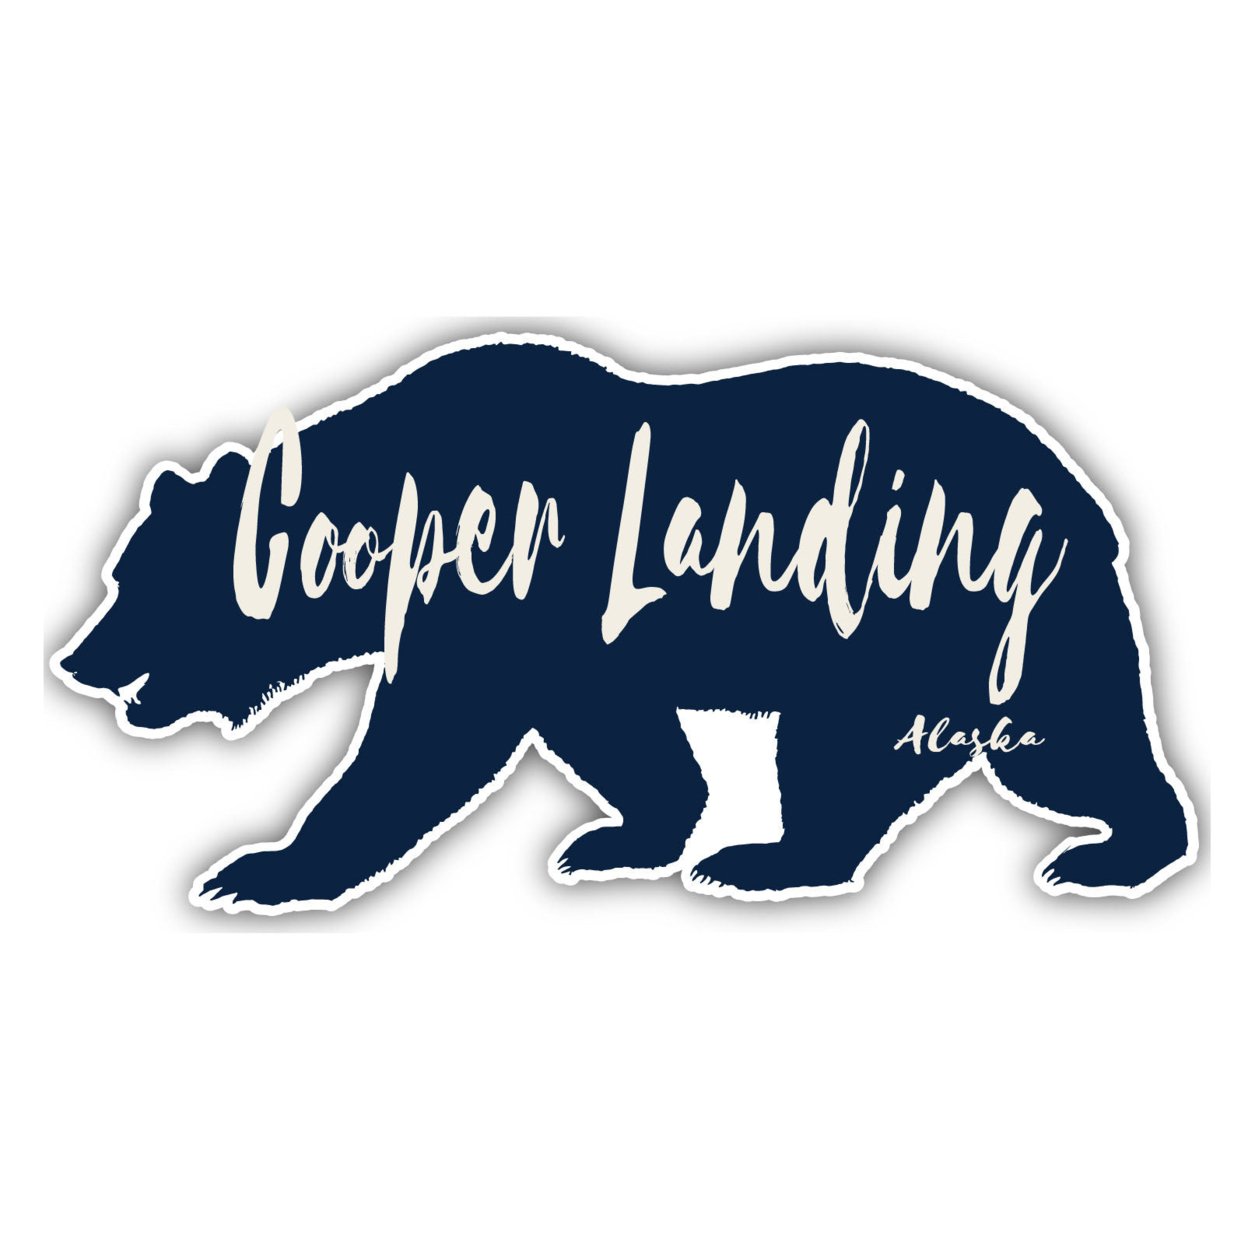 Cooper Landing Alaska Souvenir Decorative Stickers (Choose Theme And Size) - Single Unit, 4-Inch, Adventures Awaits